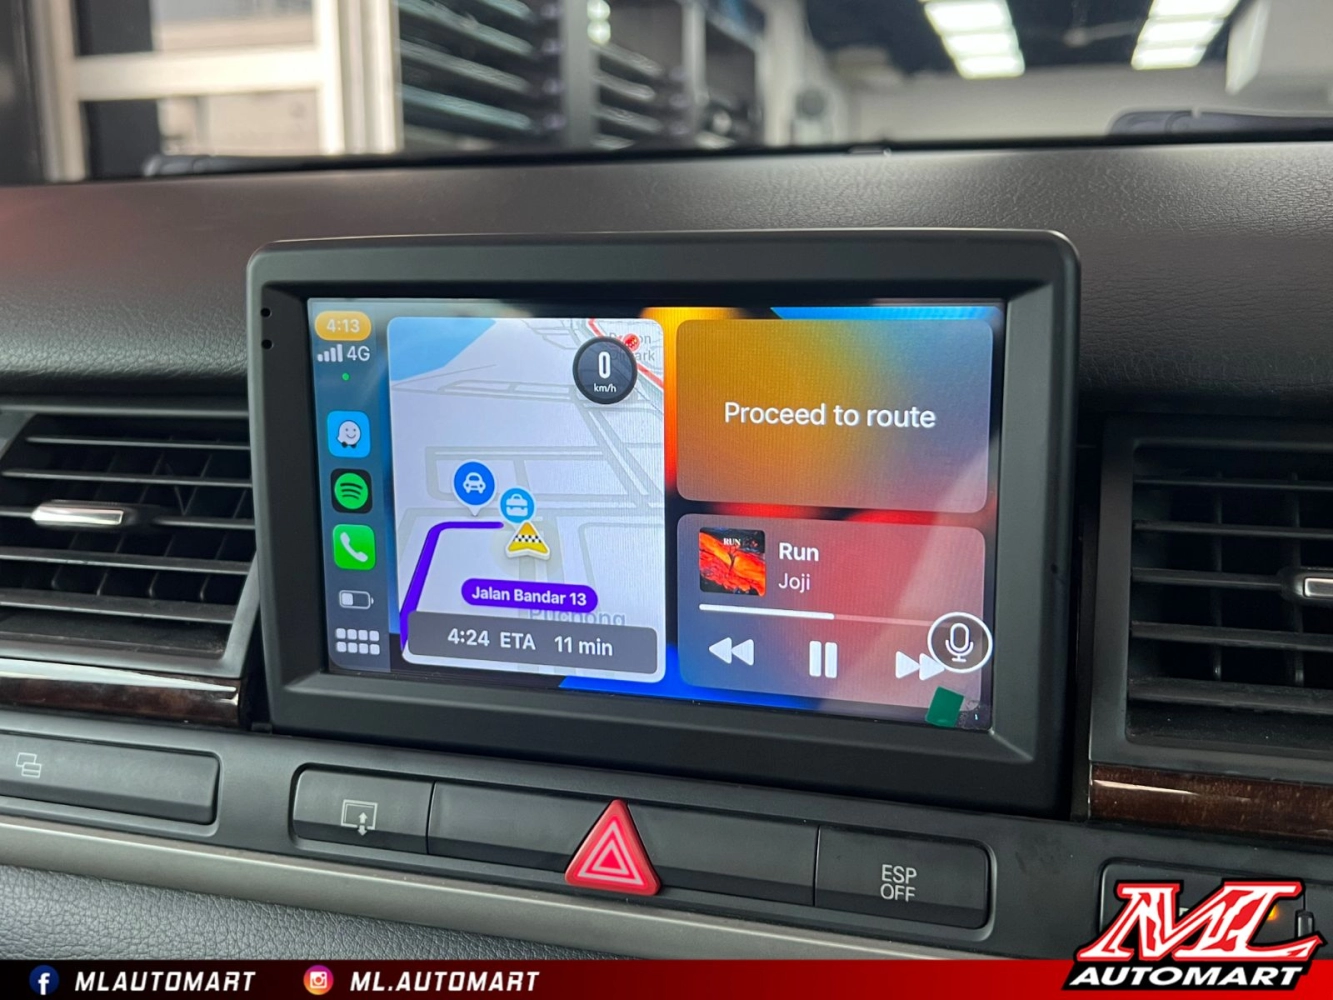 Audi A6 C6 Android Monitor Android Monitor Selangor, Malaysia, Kuala Lumpur  (KL), Puchong Supplier, Suppliers, Supply, Supplies